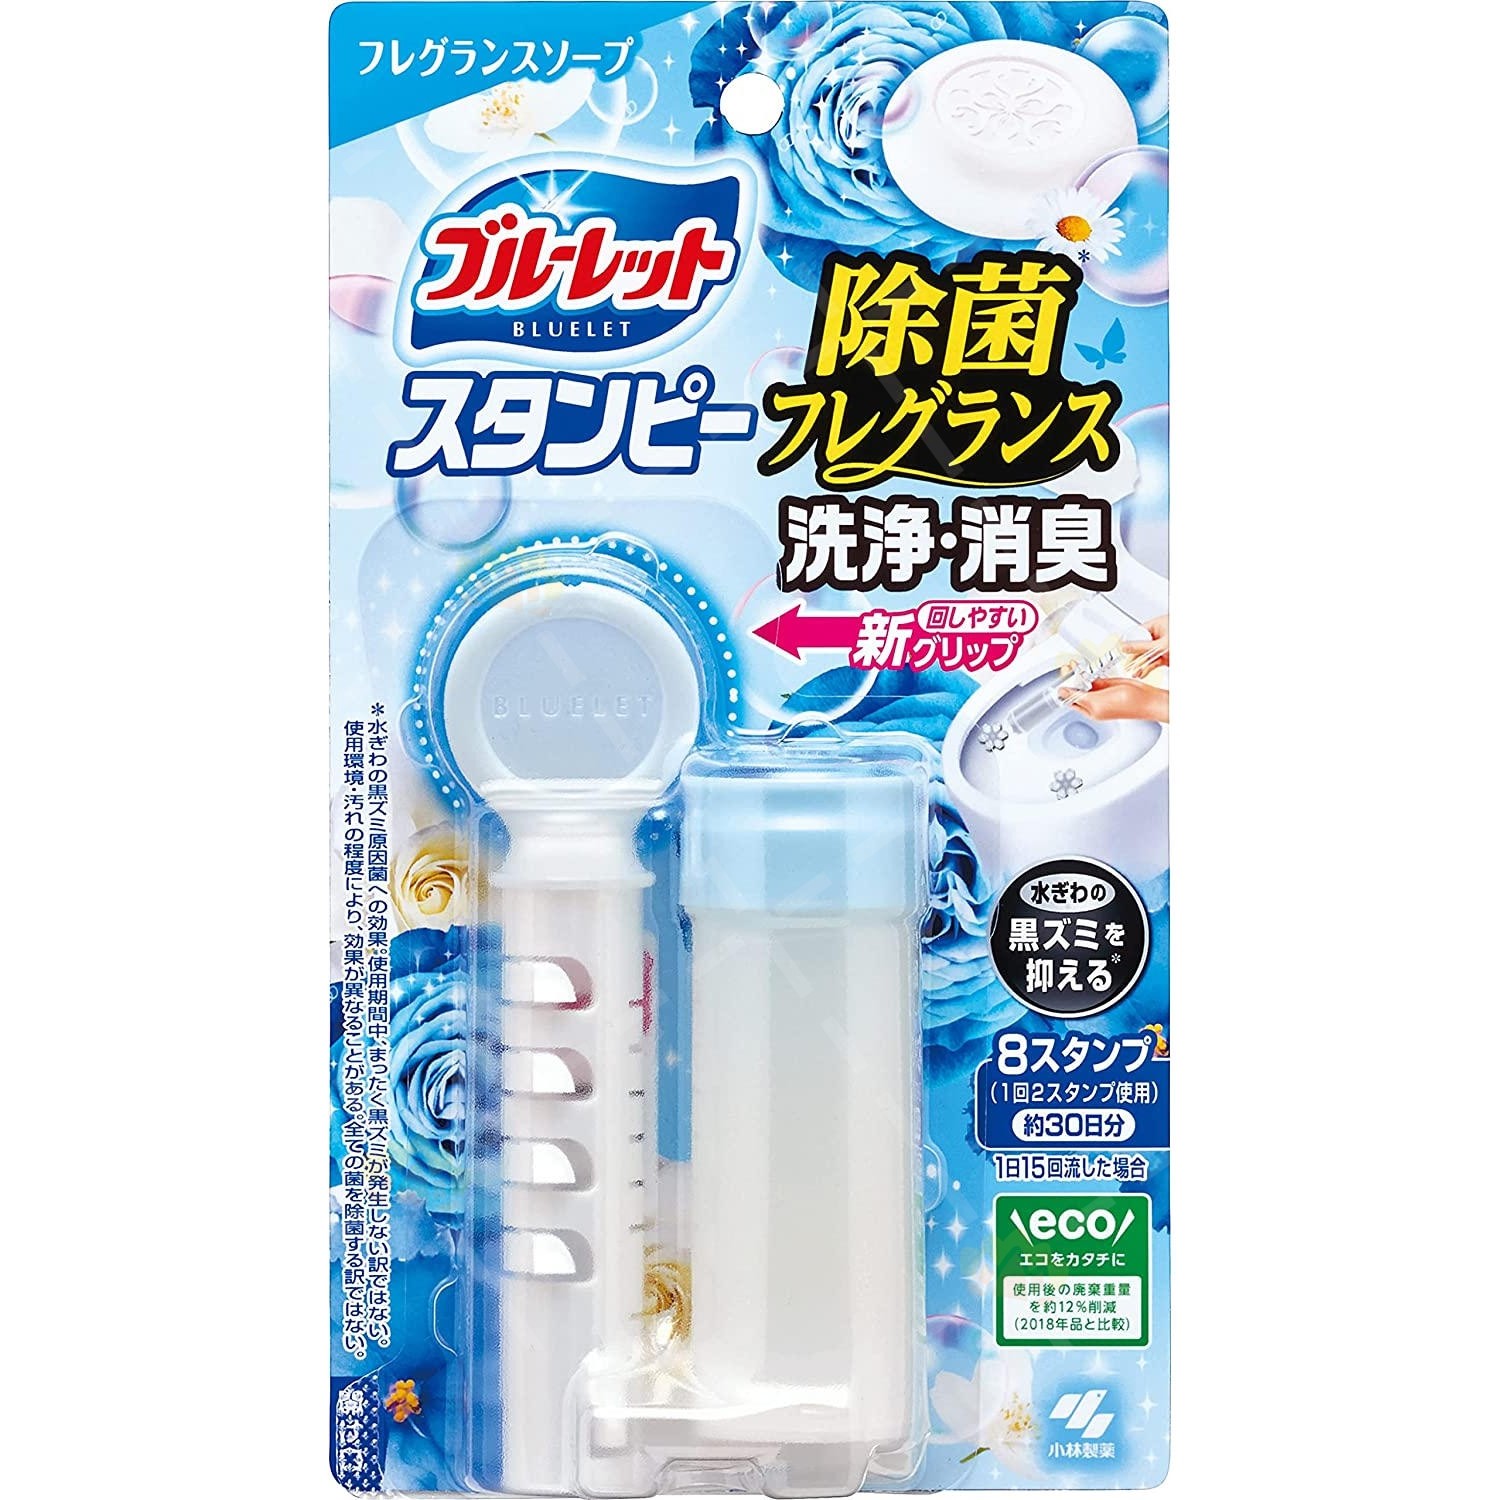 kobayashi-bluelet-stampy-liquid-deodorant-gel-for-toilet-original-scents